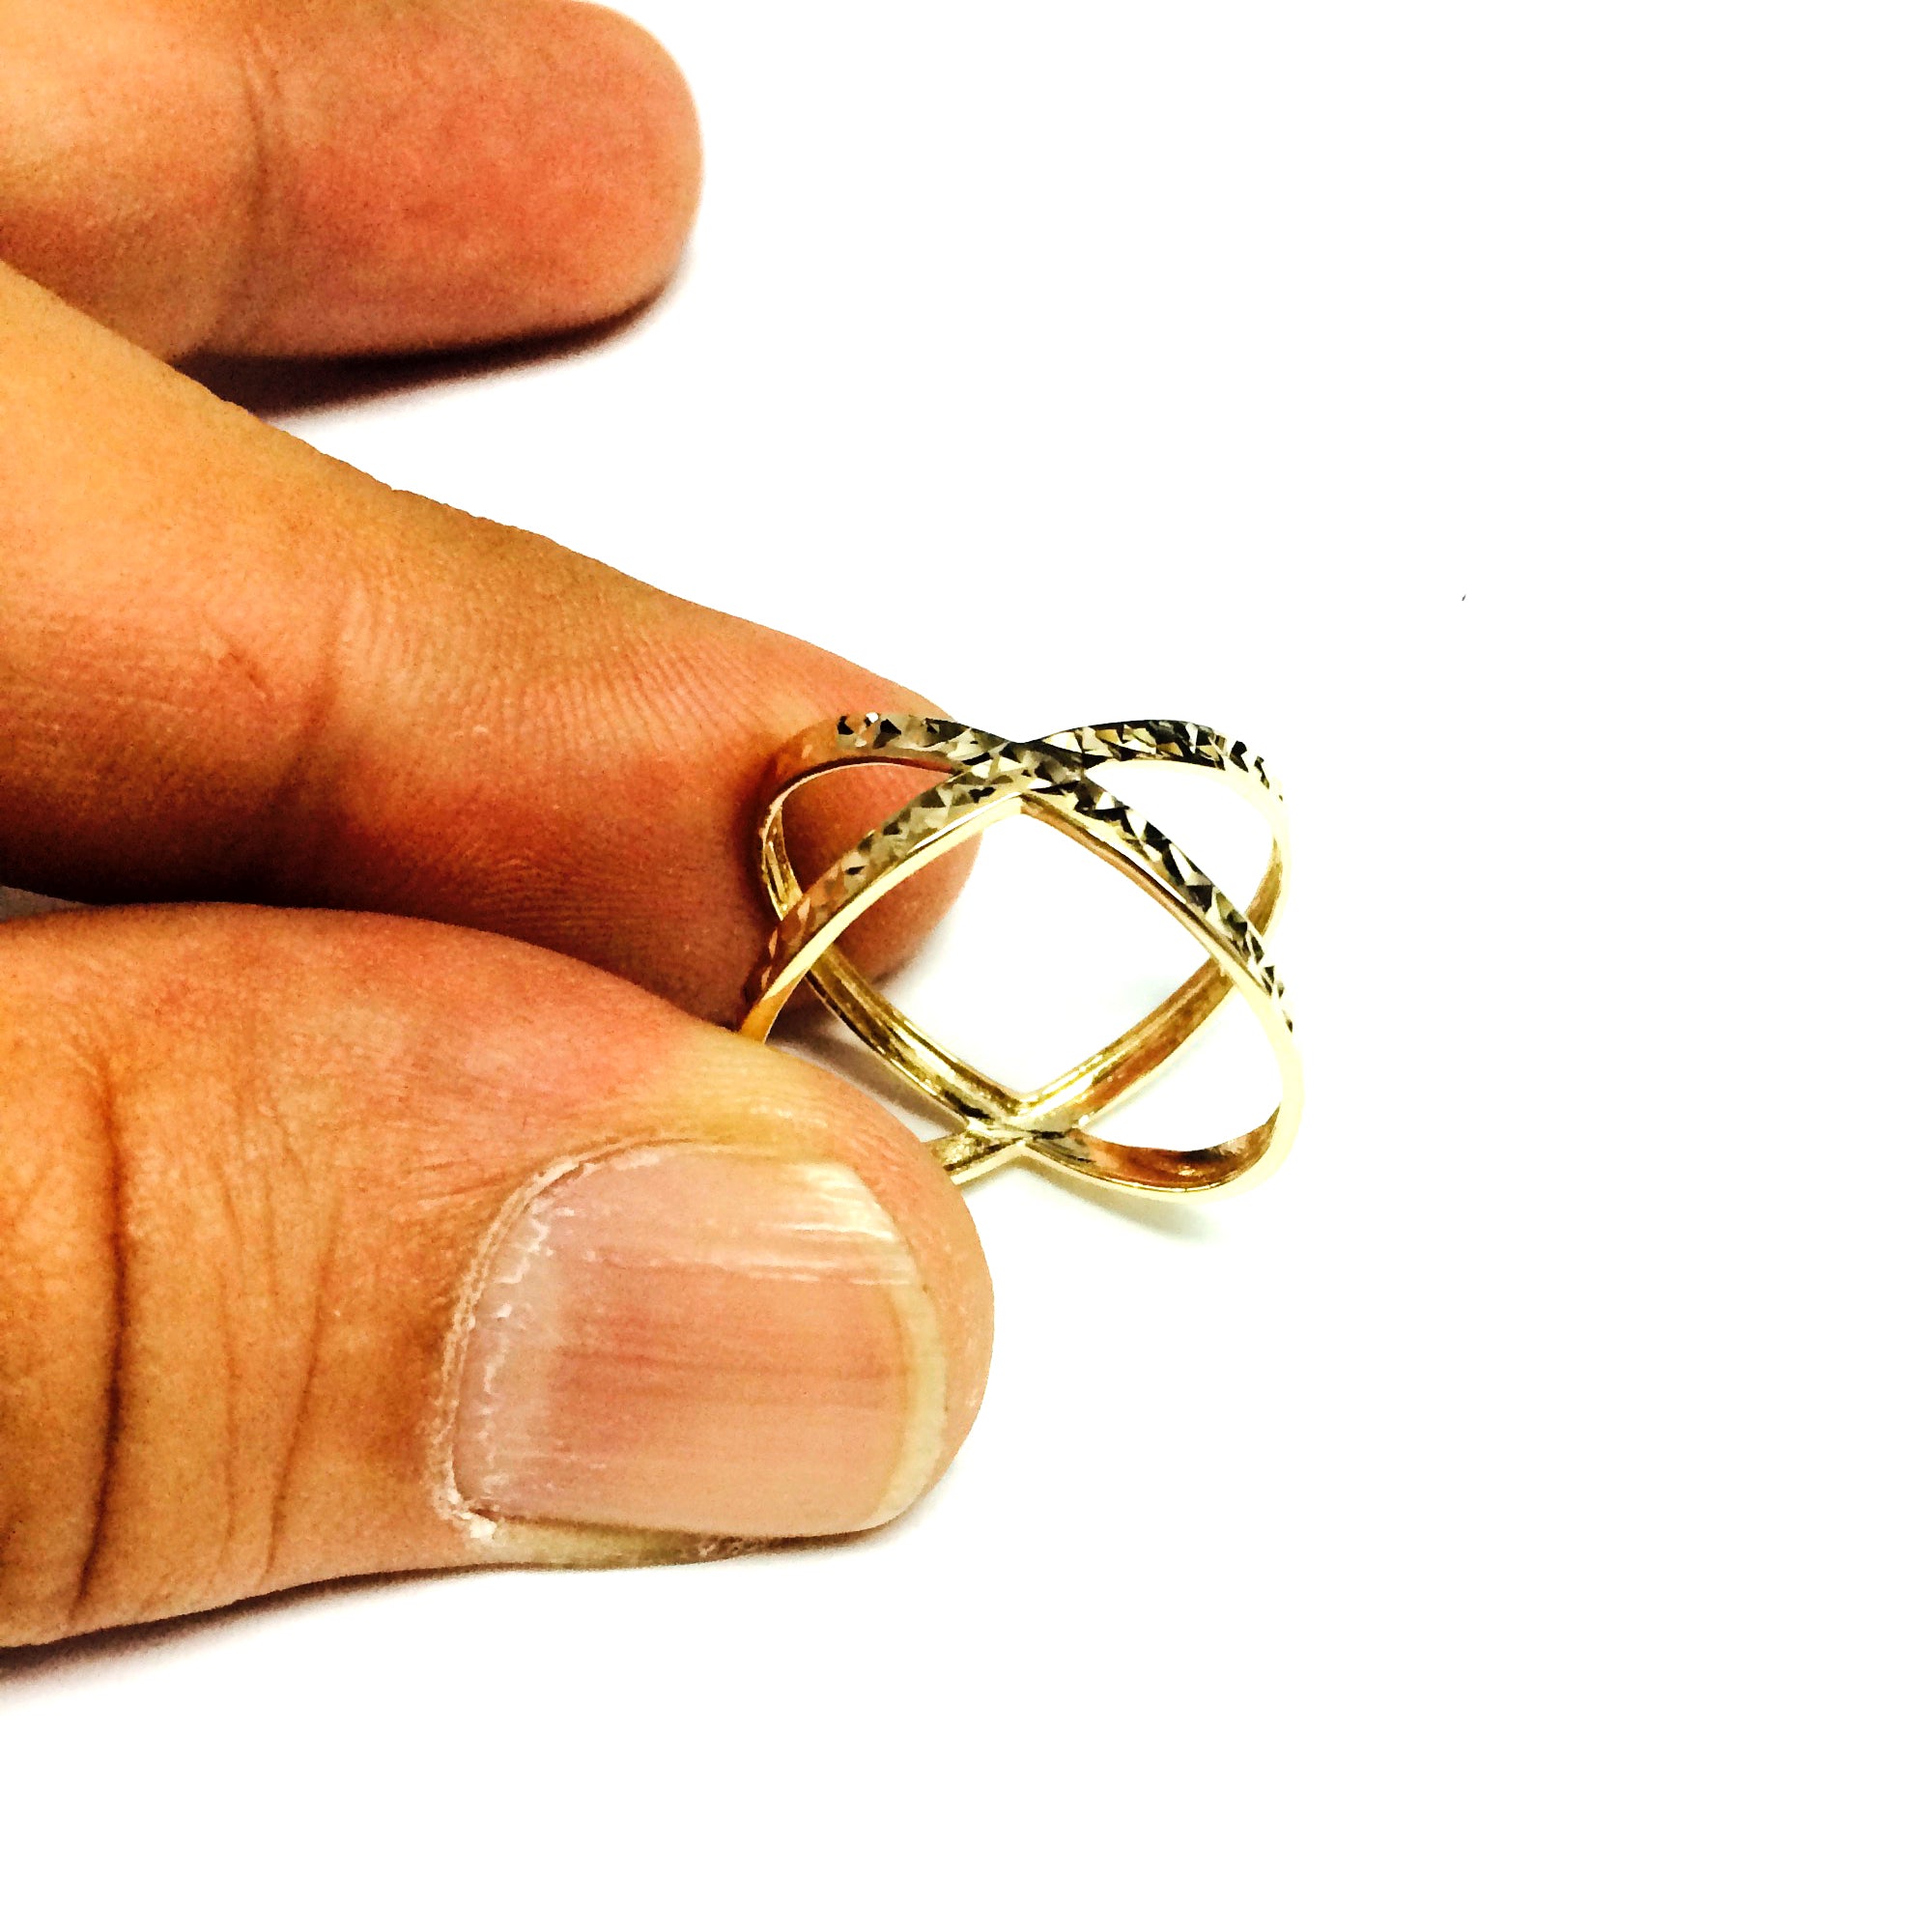 14K Yellow Gold Diamond Cut Cross Over X Design Fashion Ring fine designer jewelry for men and women